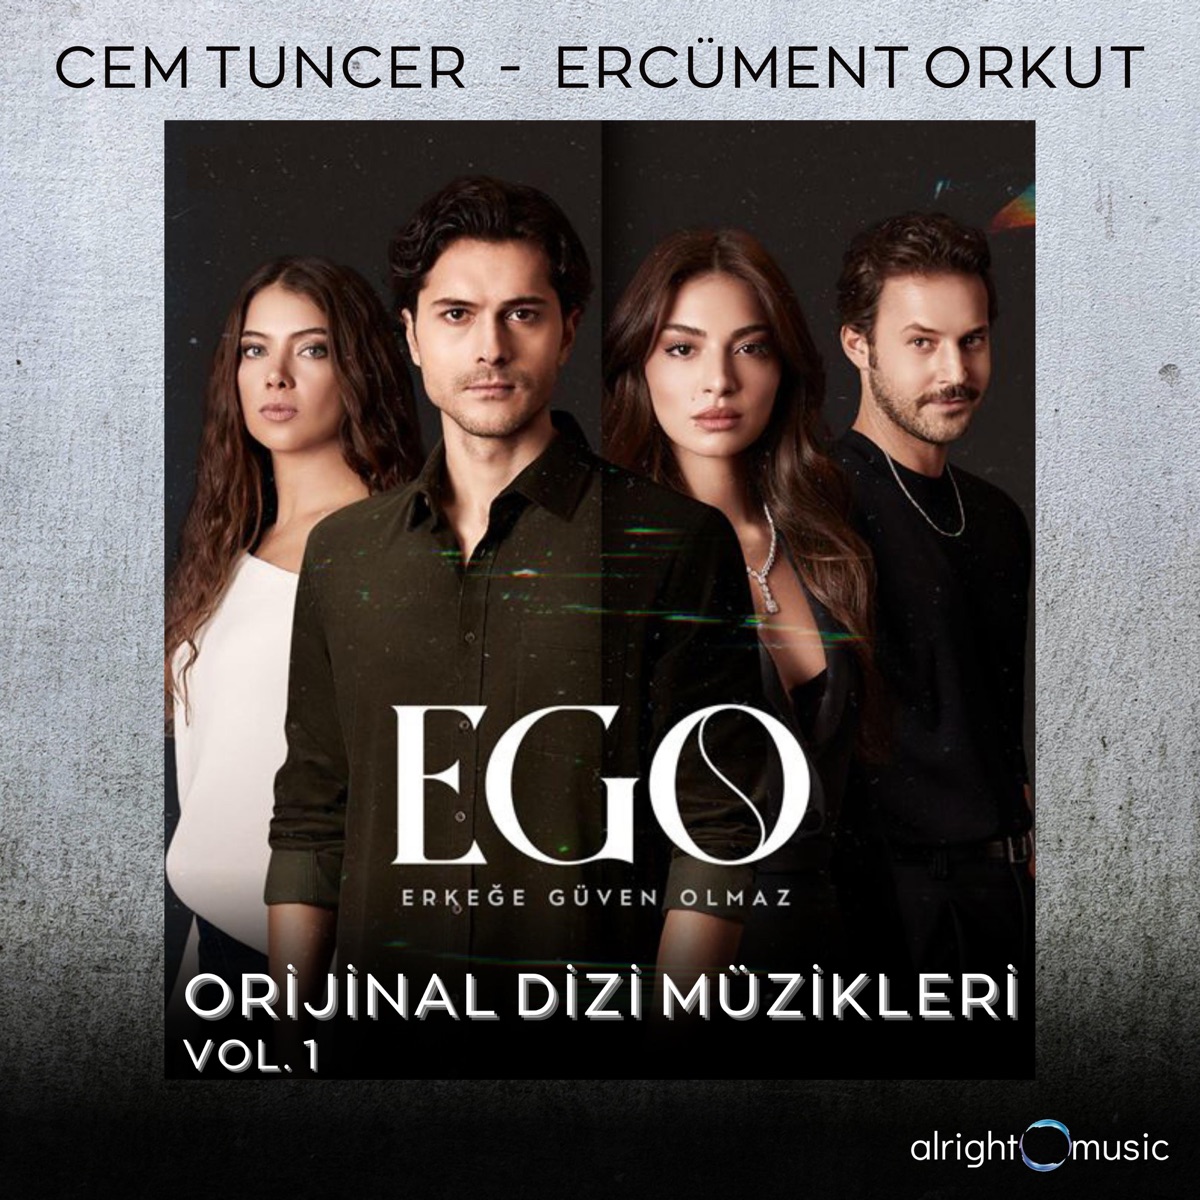 Ego (Orijinal Dizi Müzikleri Vol. 1) - Album by Cem Tuncer & Ercüment Orkut  - Apple Music